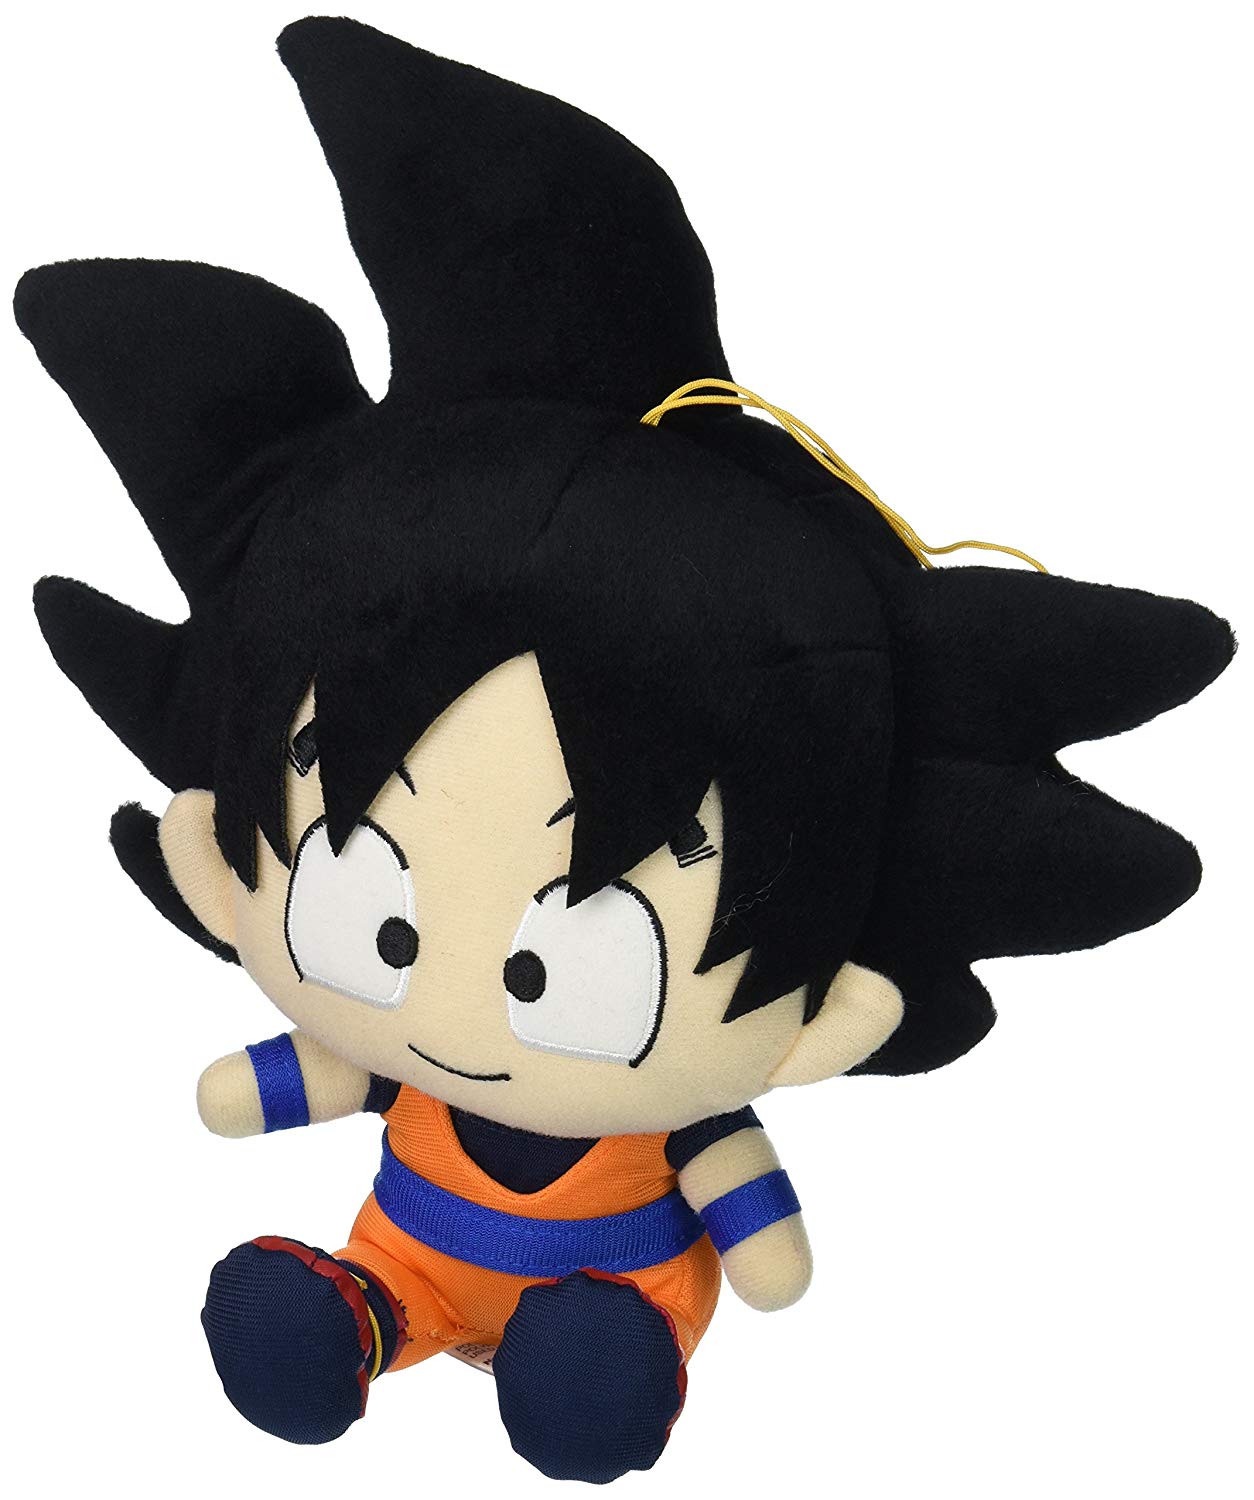 Great Eastern Dragon Ball Z Goku Sitting Plush Doll - Super Anime Store FREE SHIPPING FAST SHIPPING USA